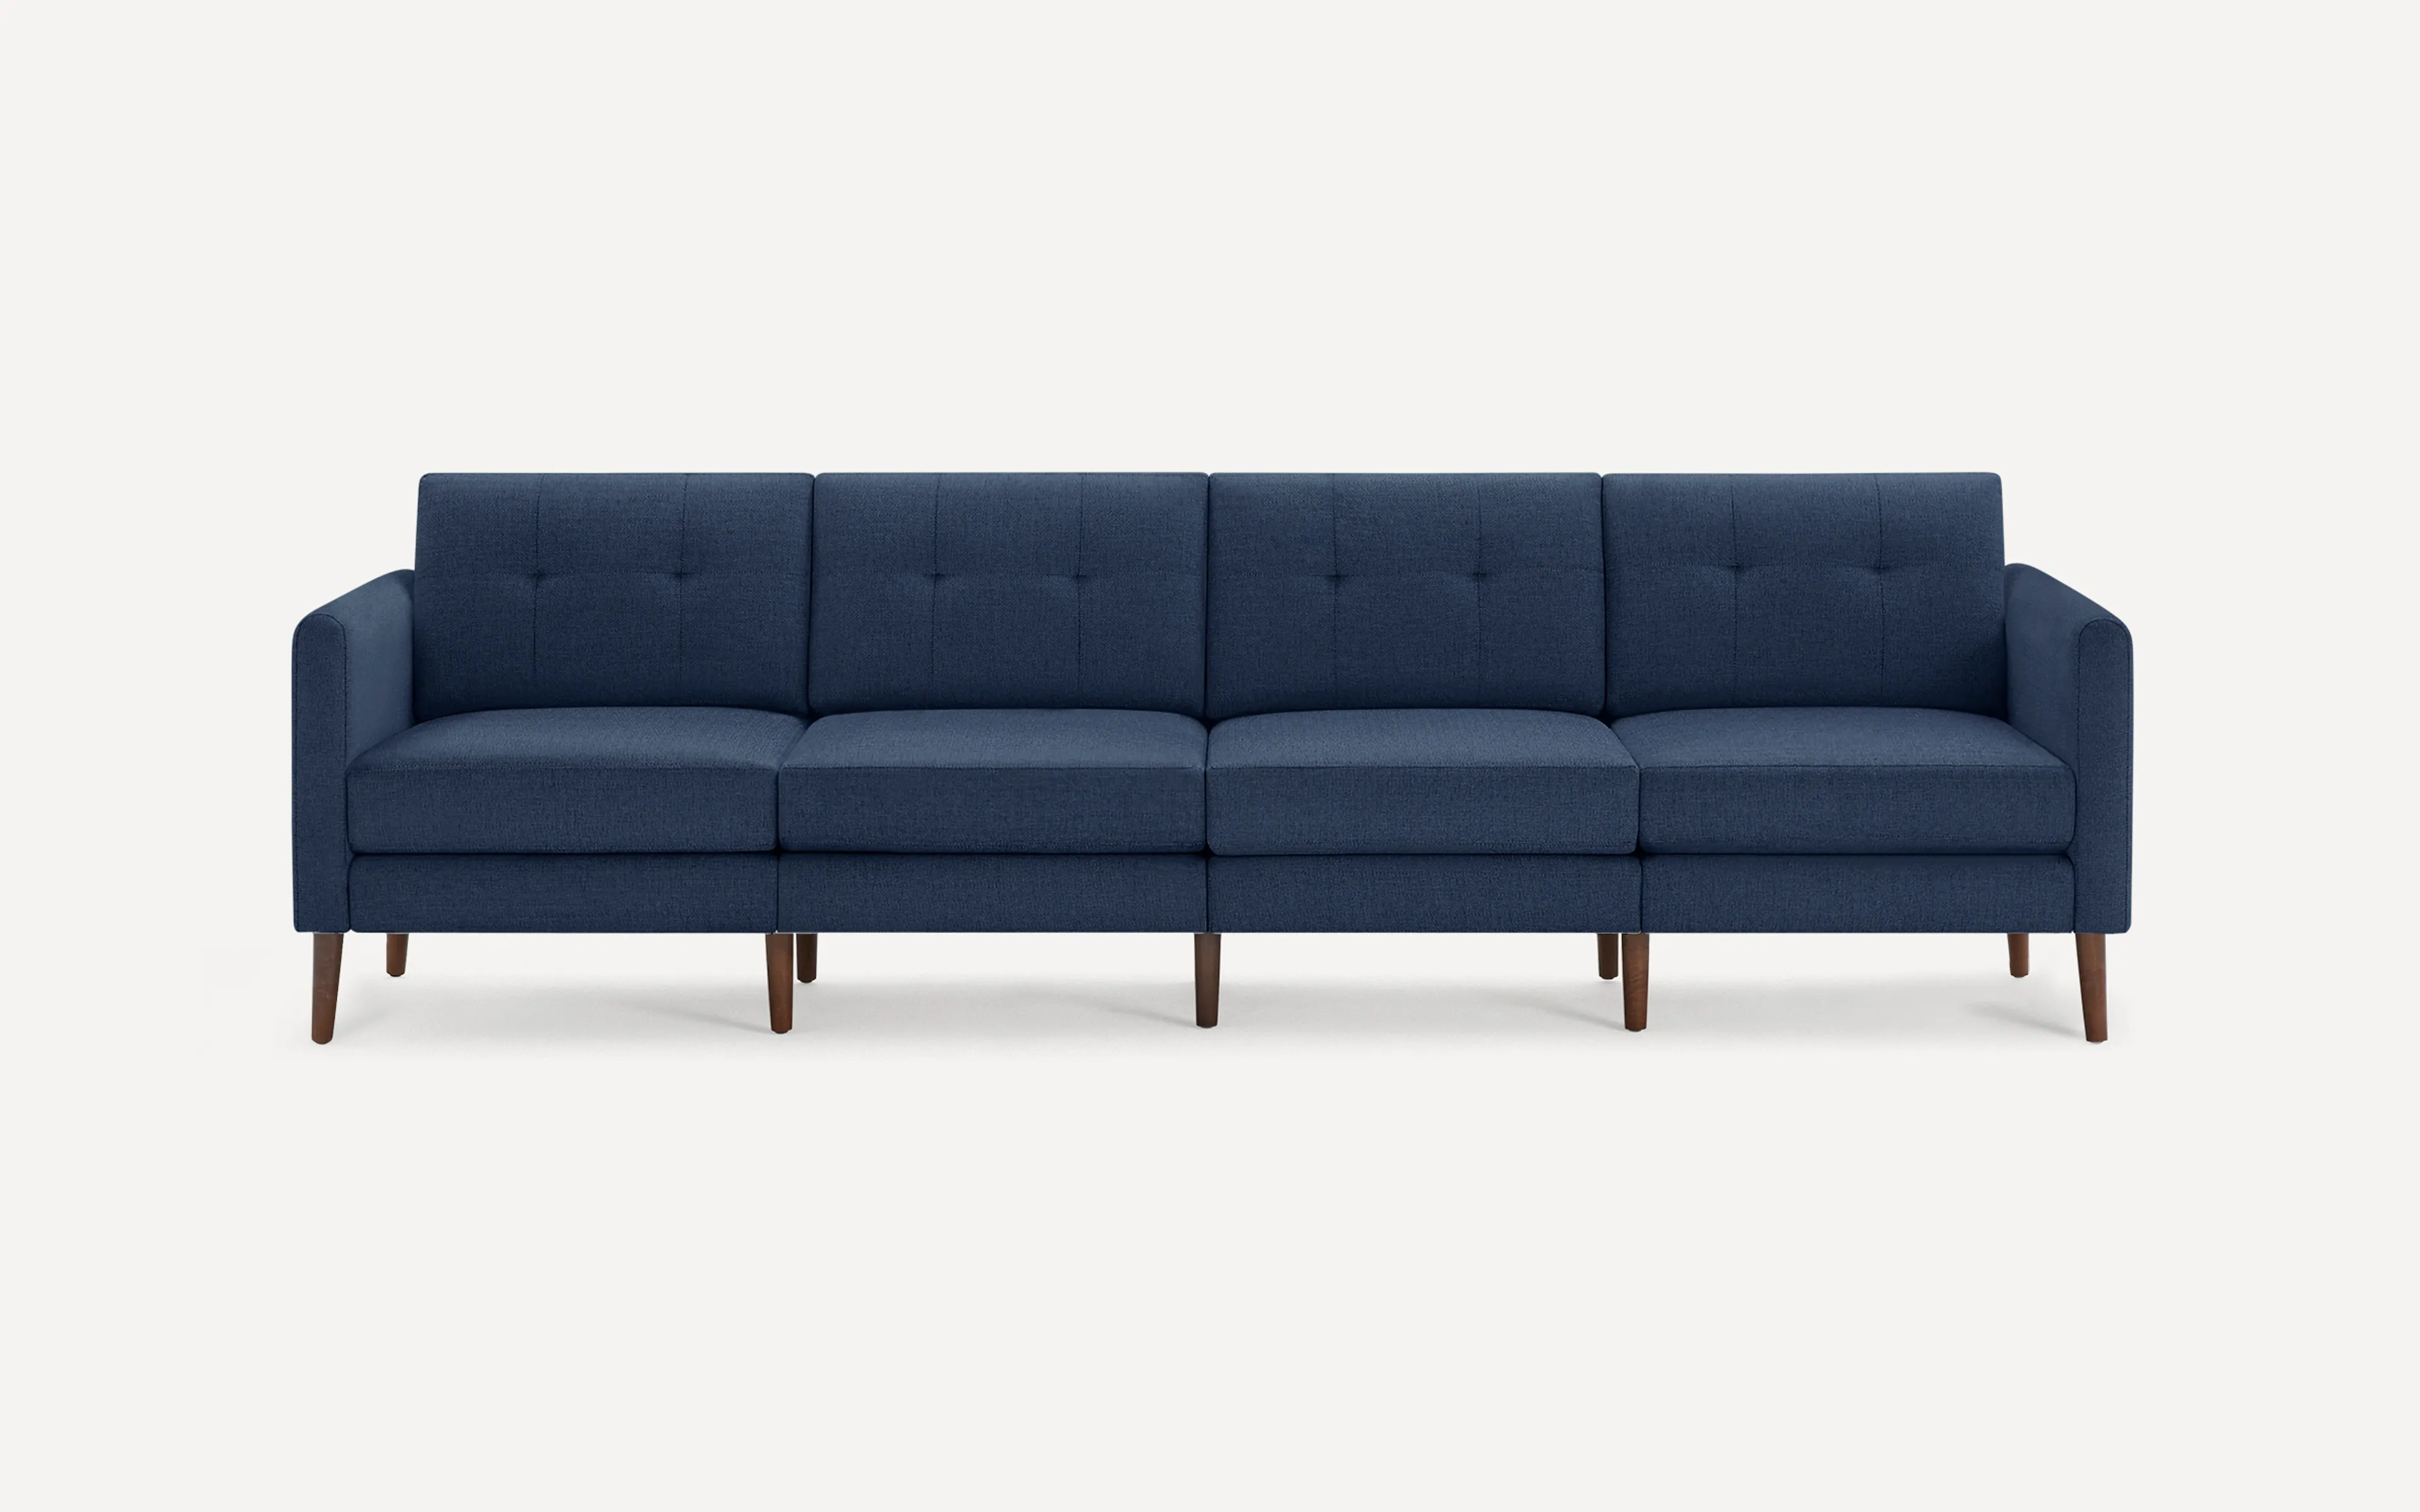 Original Nomad King Sofa in Navy Blue Fabric